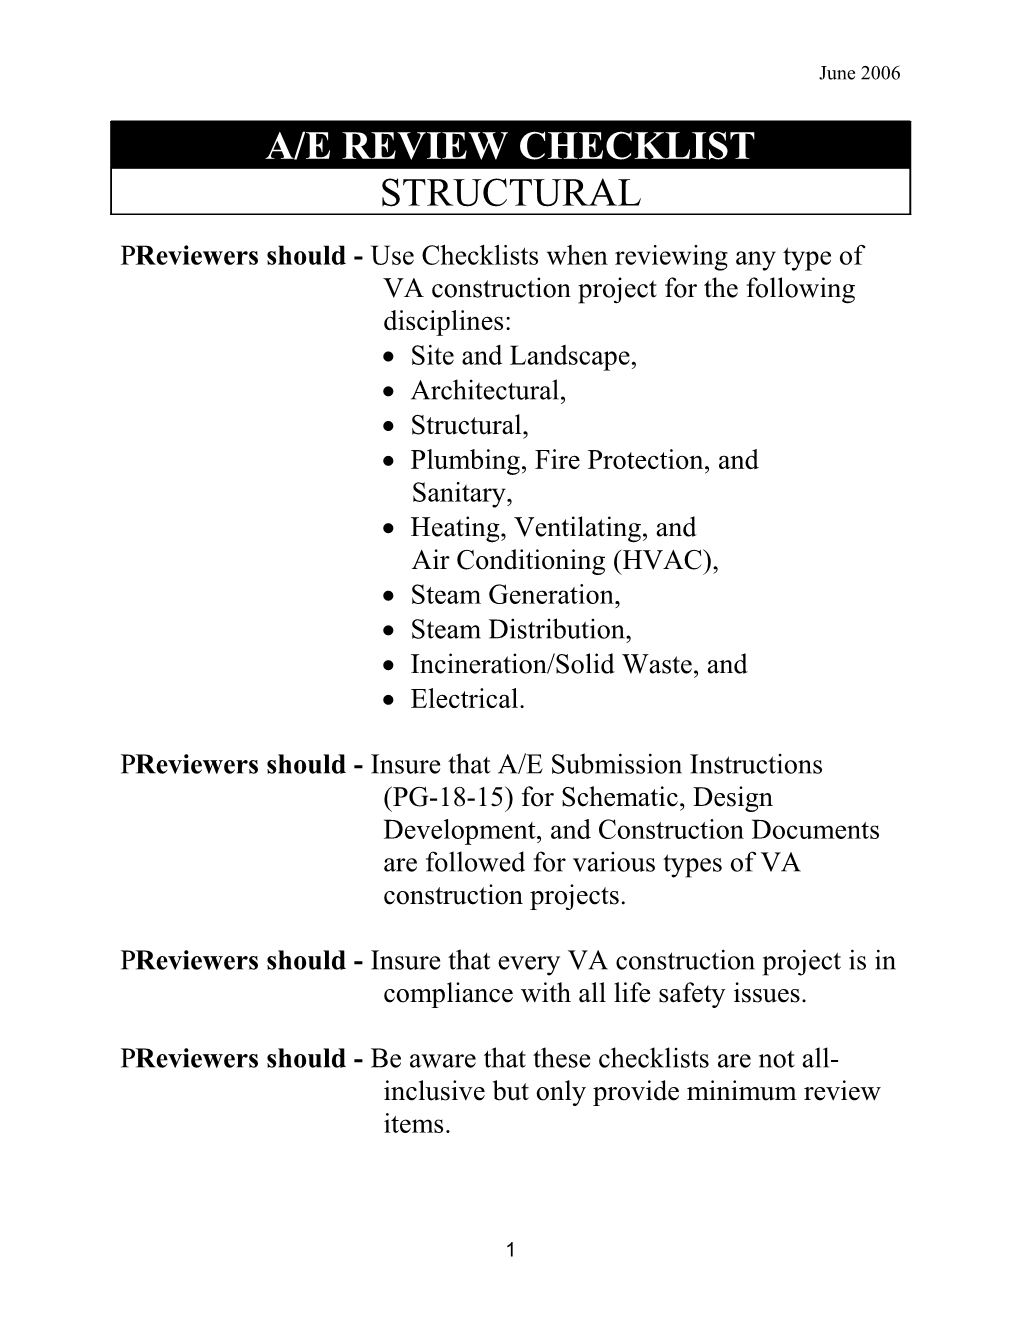 A/E Review Checklist - Structural